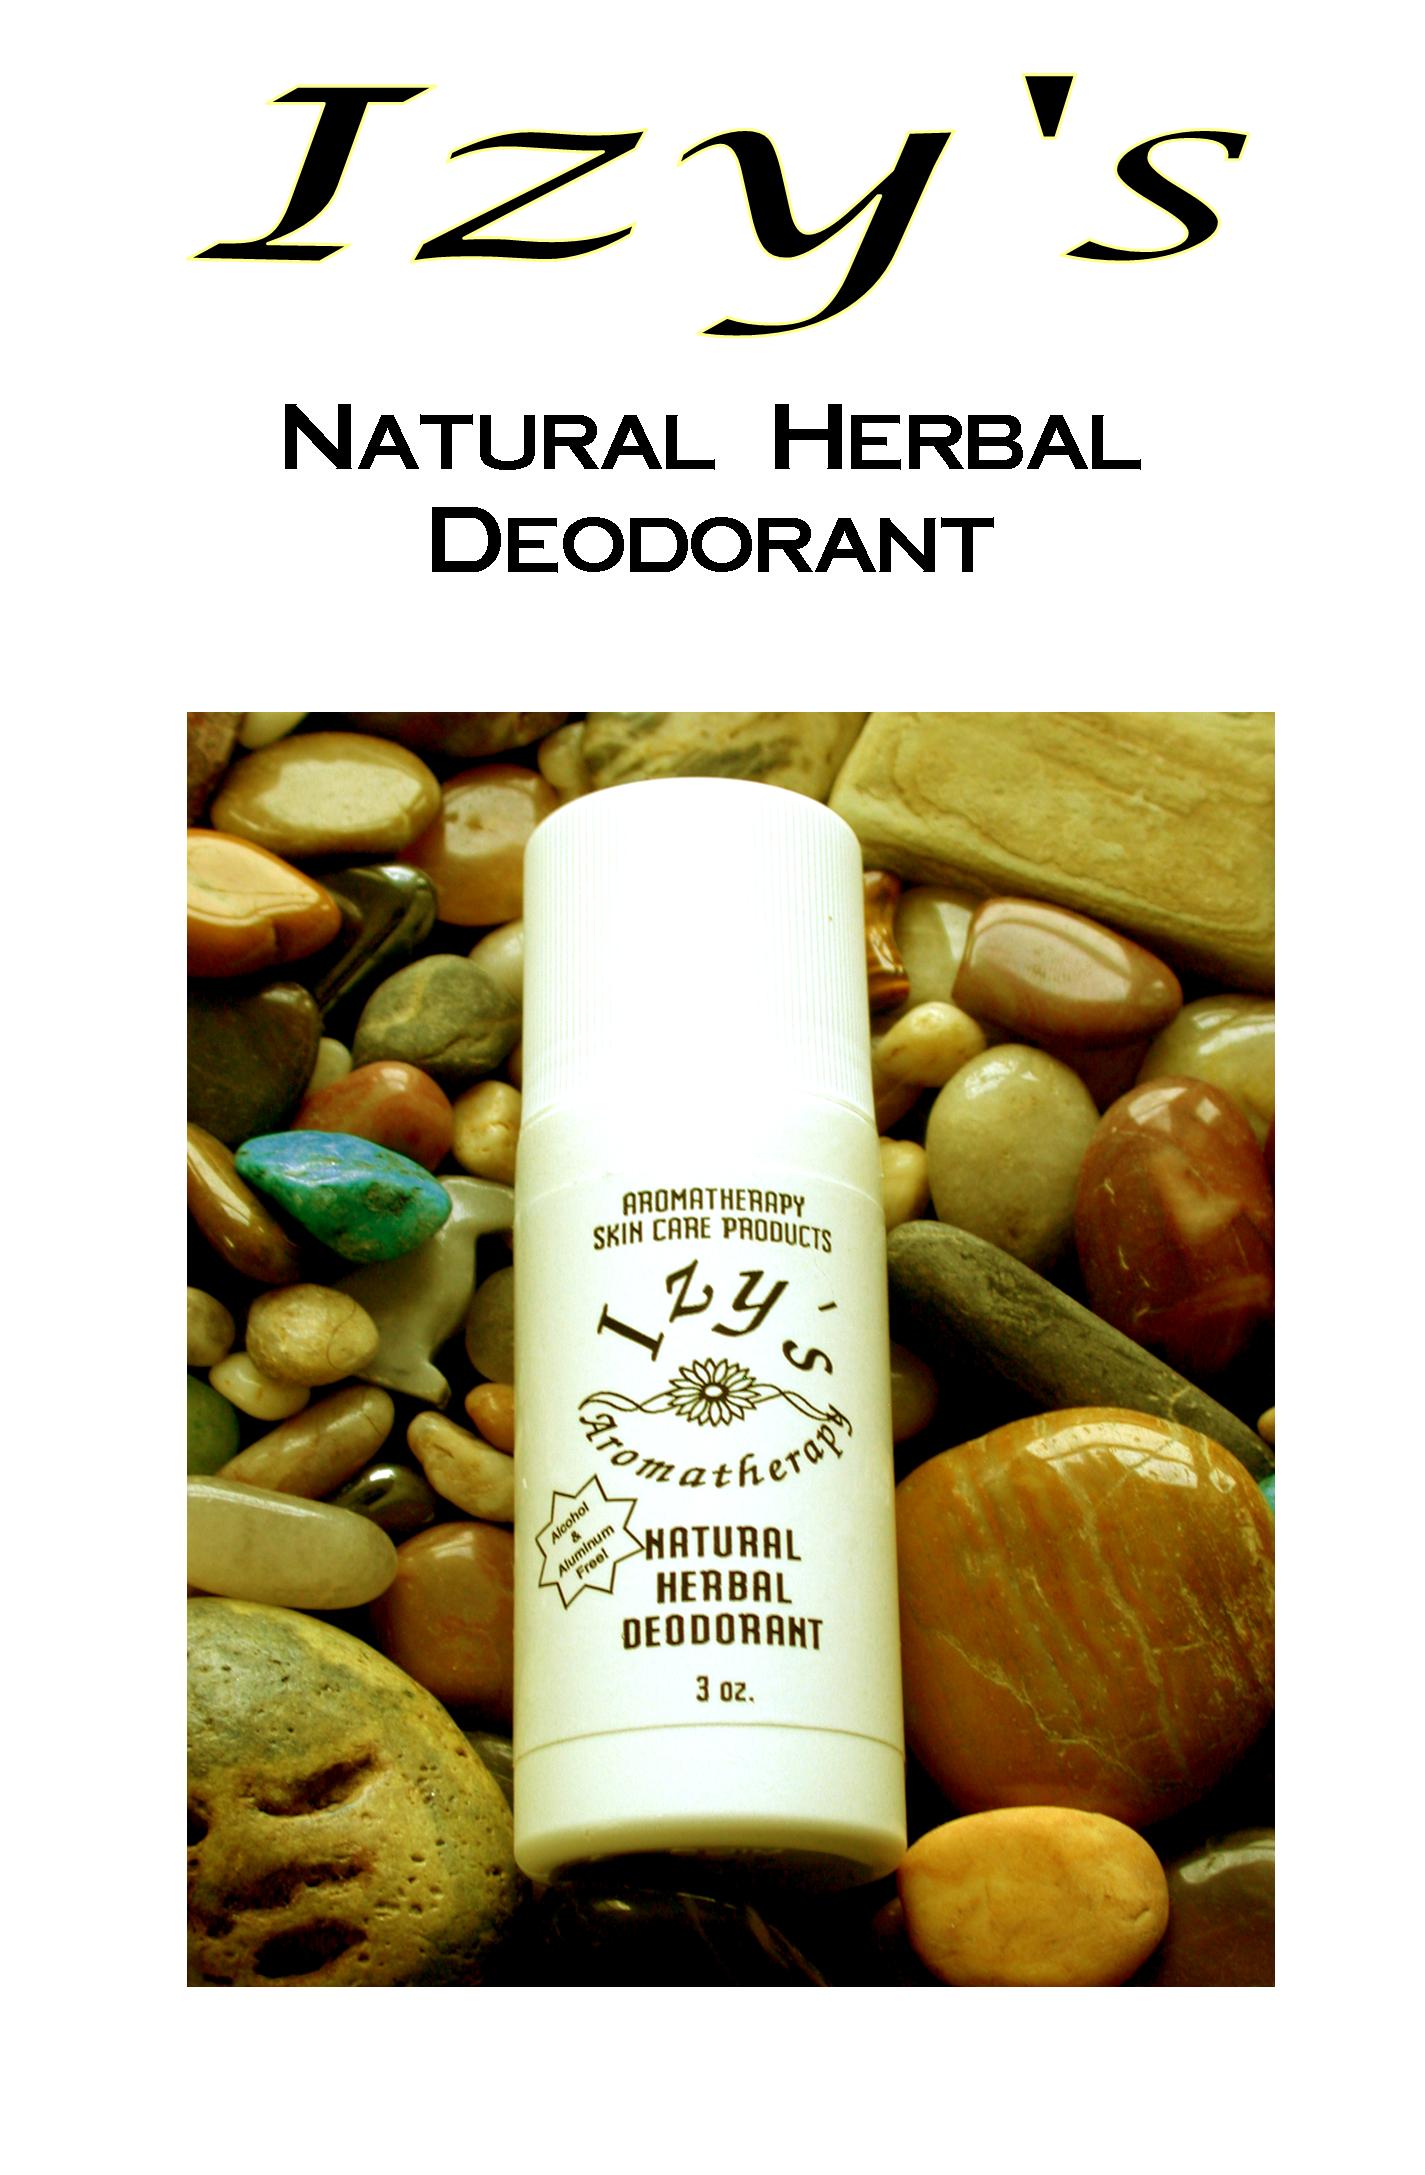 Izy's Natural Herbal Deodorant